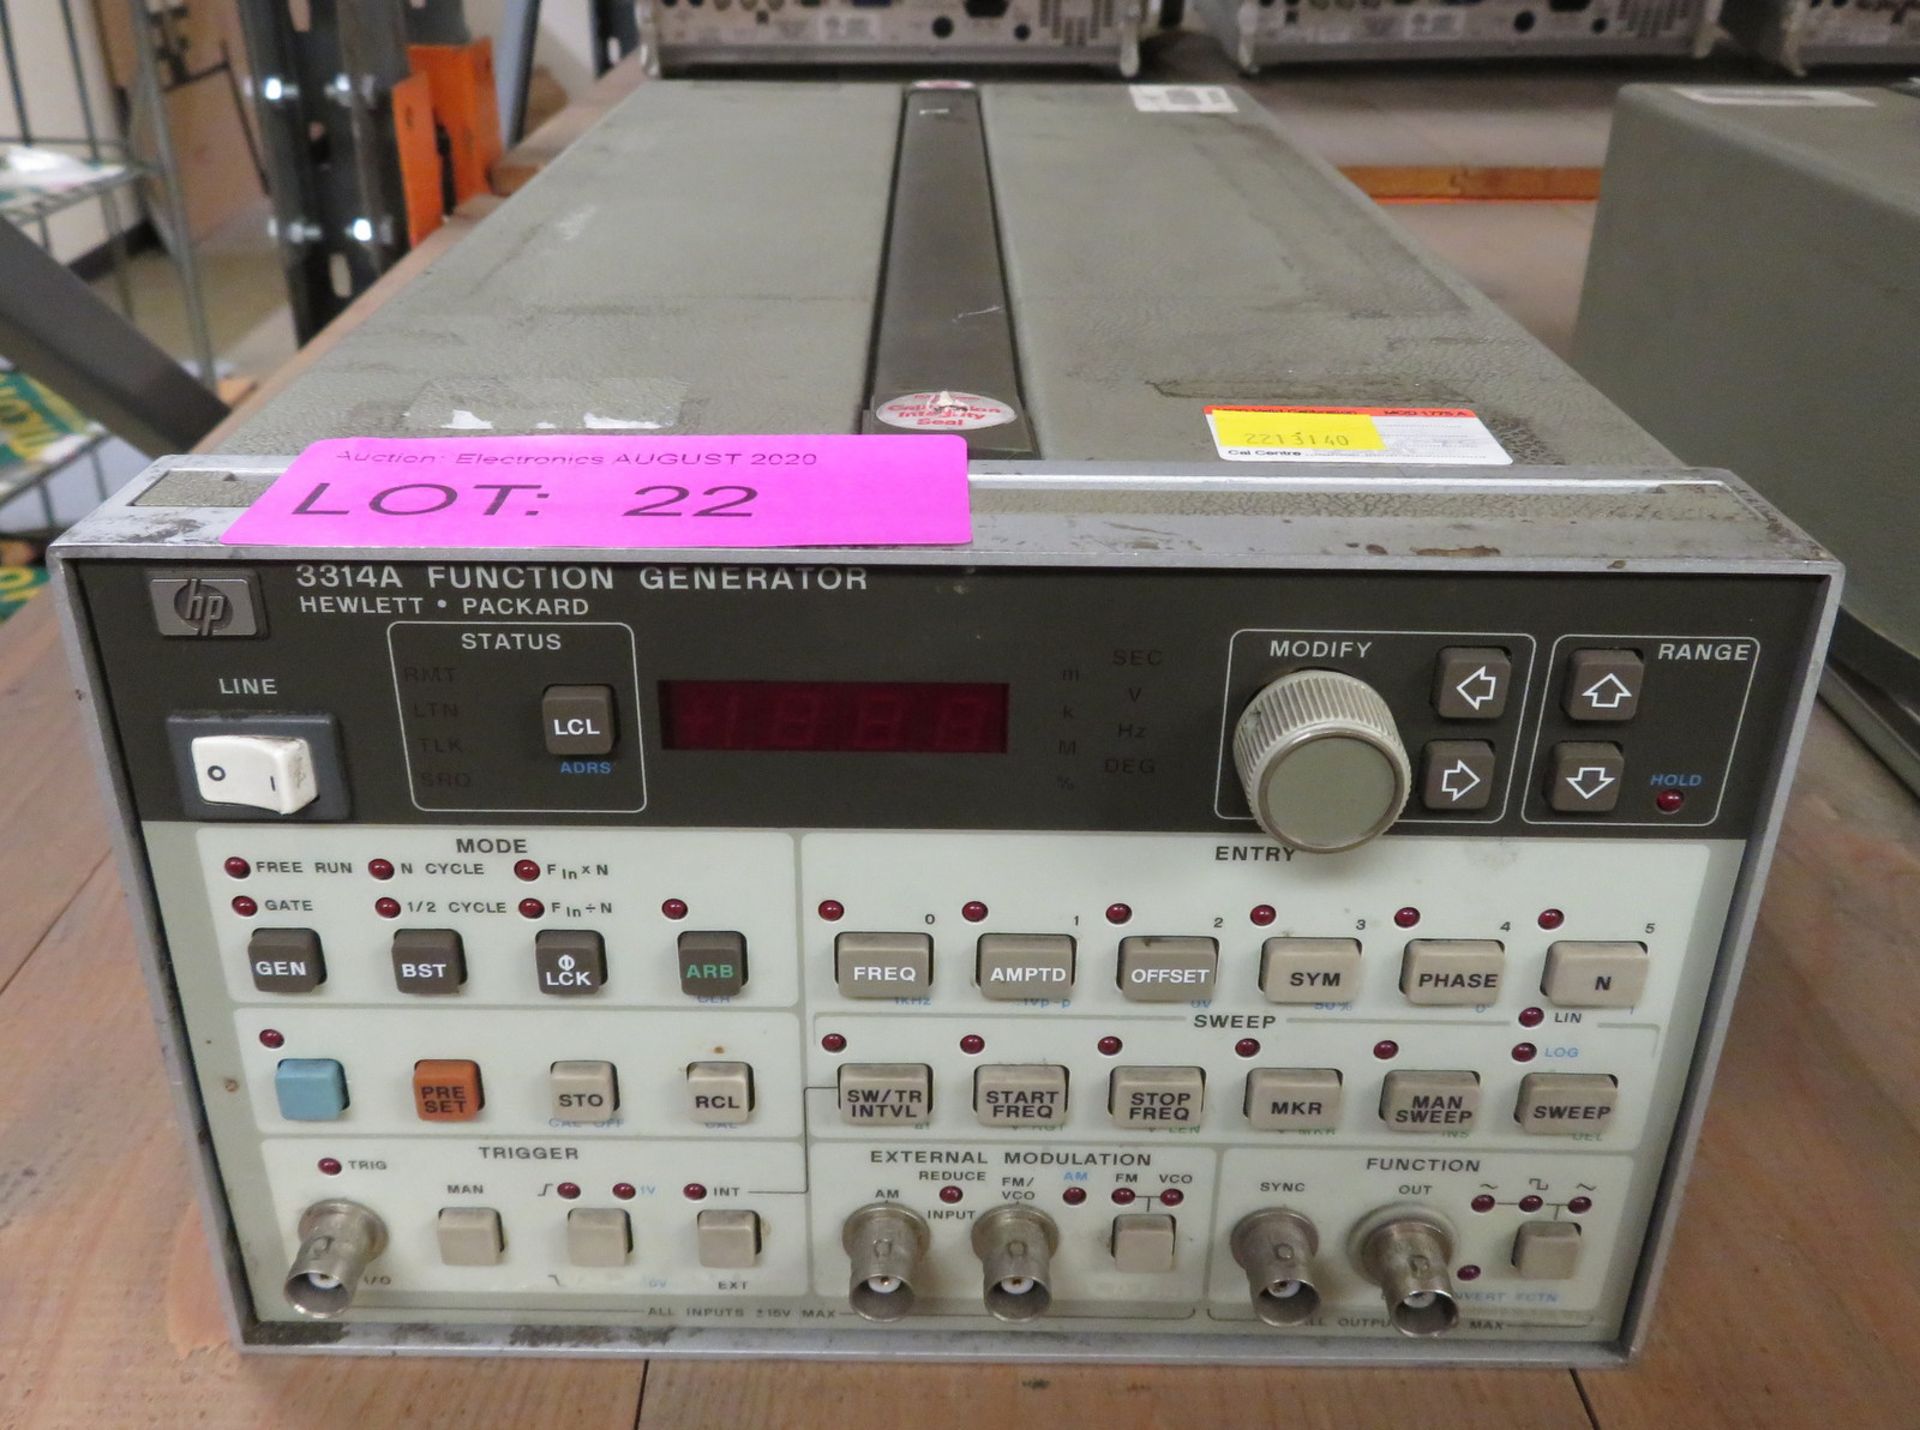 Hewlett Packard 3314A function generator